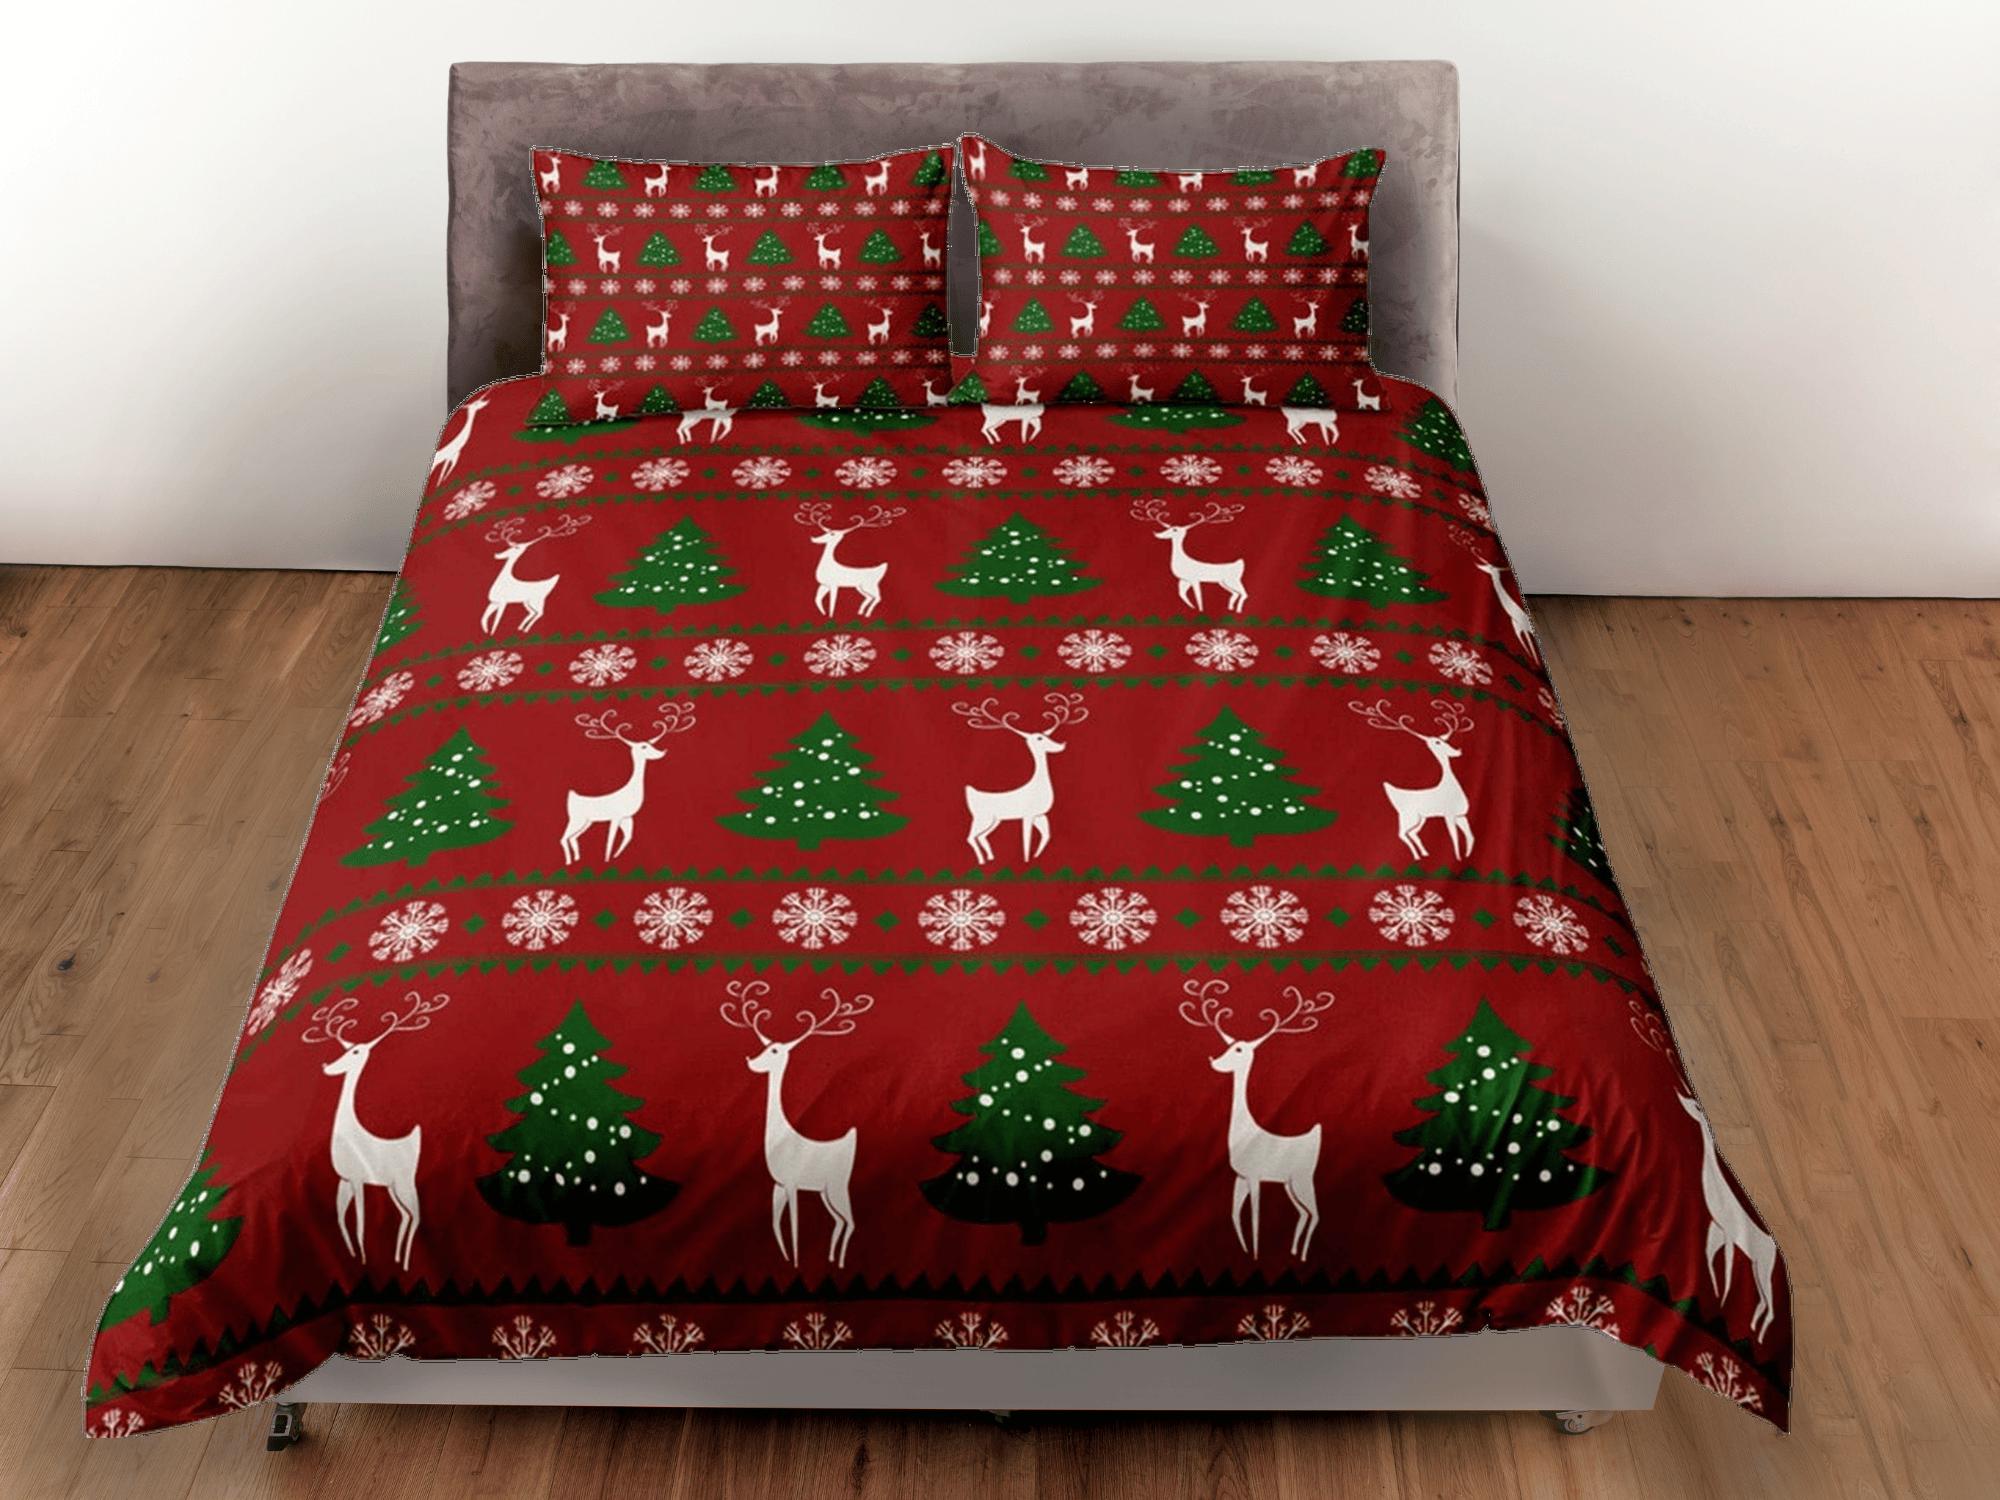 daintyduvet Ugly christmas sweater inspired duvet cover set christmas full size bedding & pillowcase, college bedding, crib toddler bedding holiday gift